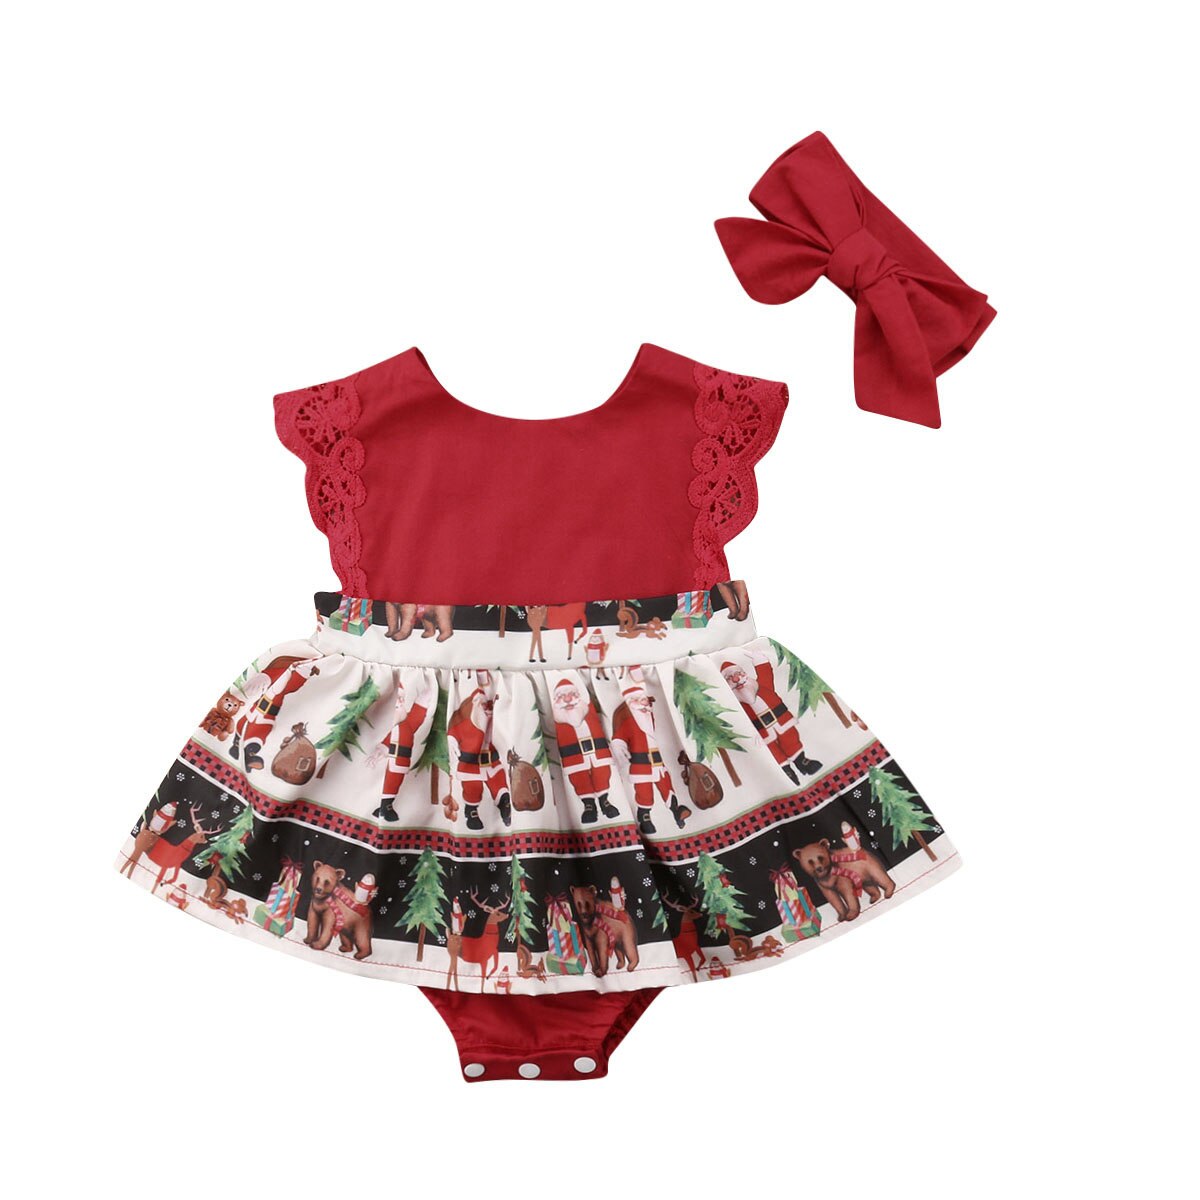 2 stk xmas spædbarn baby baby piger romper kjole + pandebånd jul fest outfit